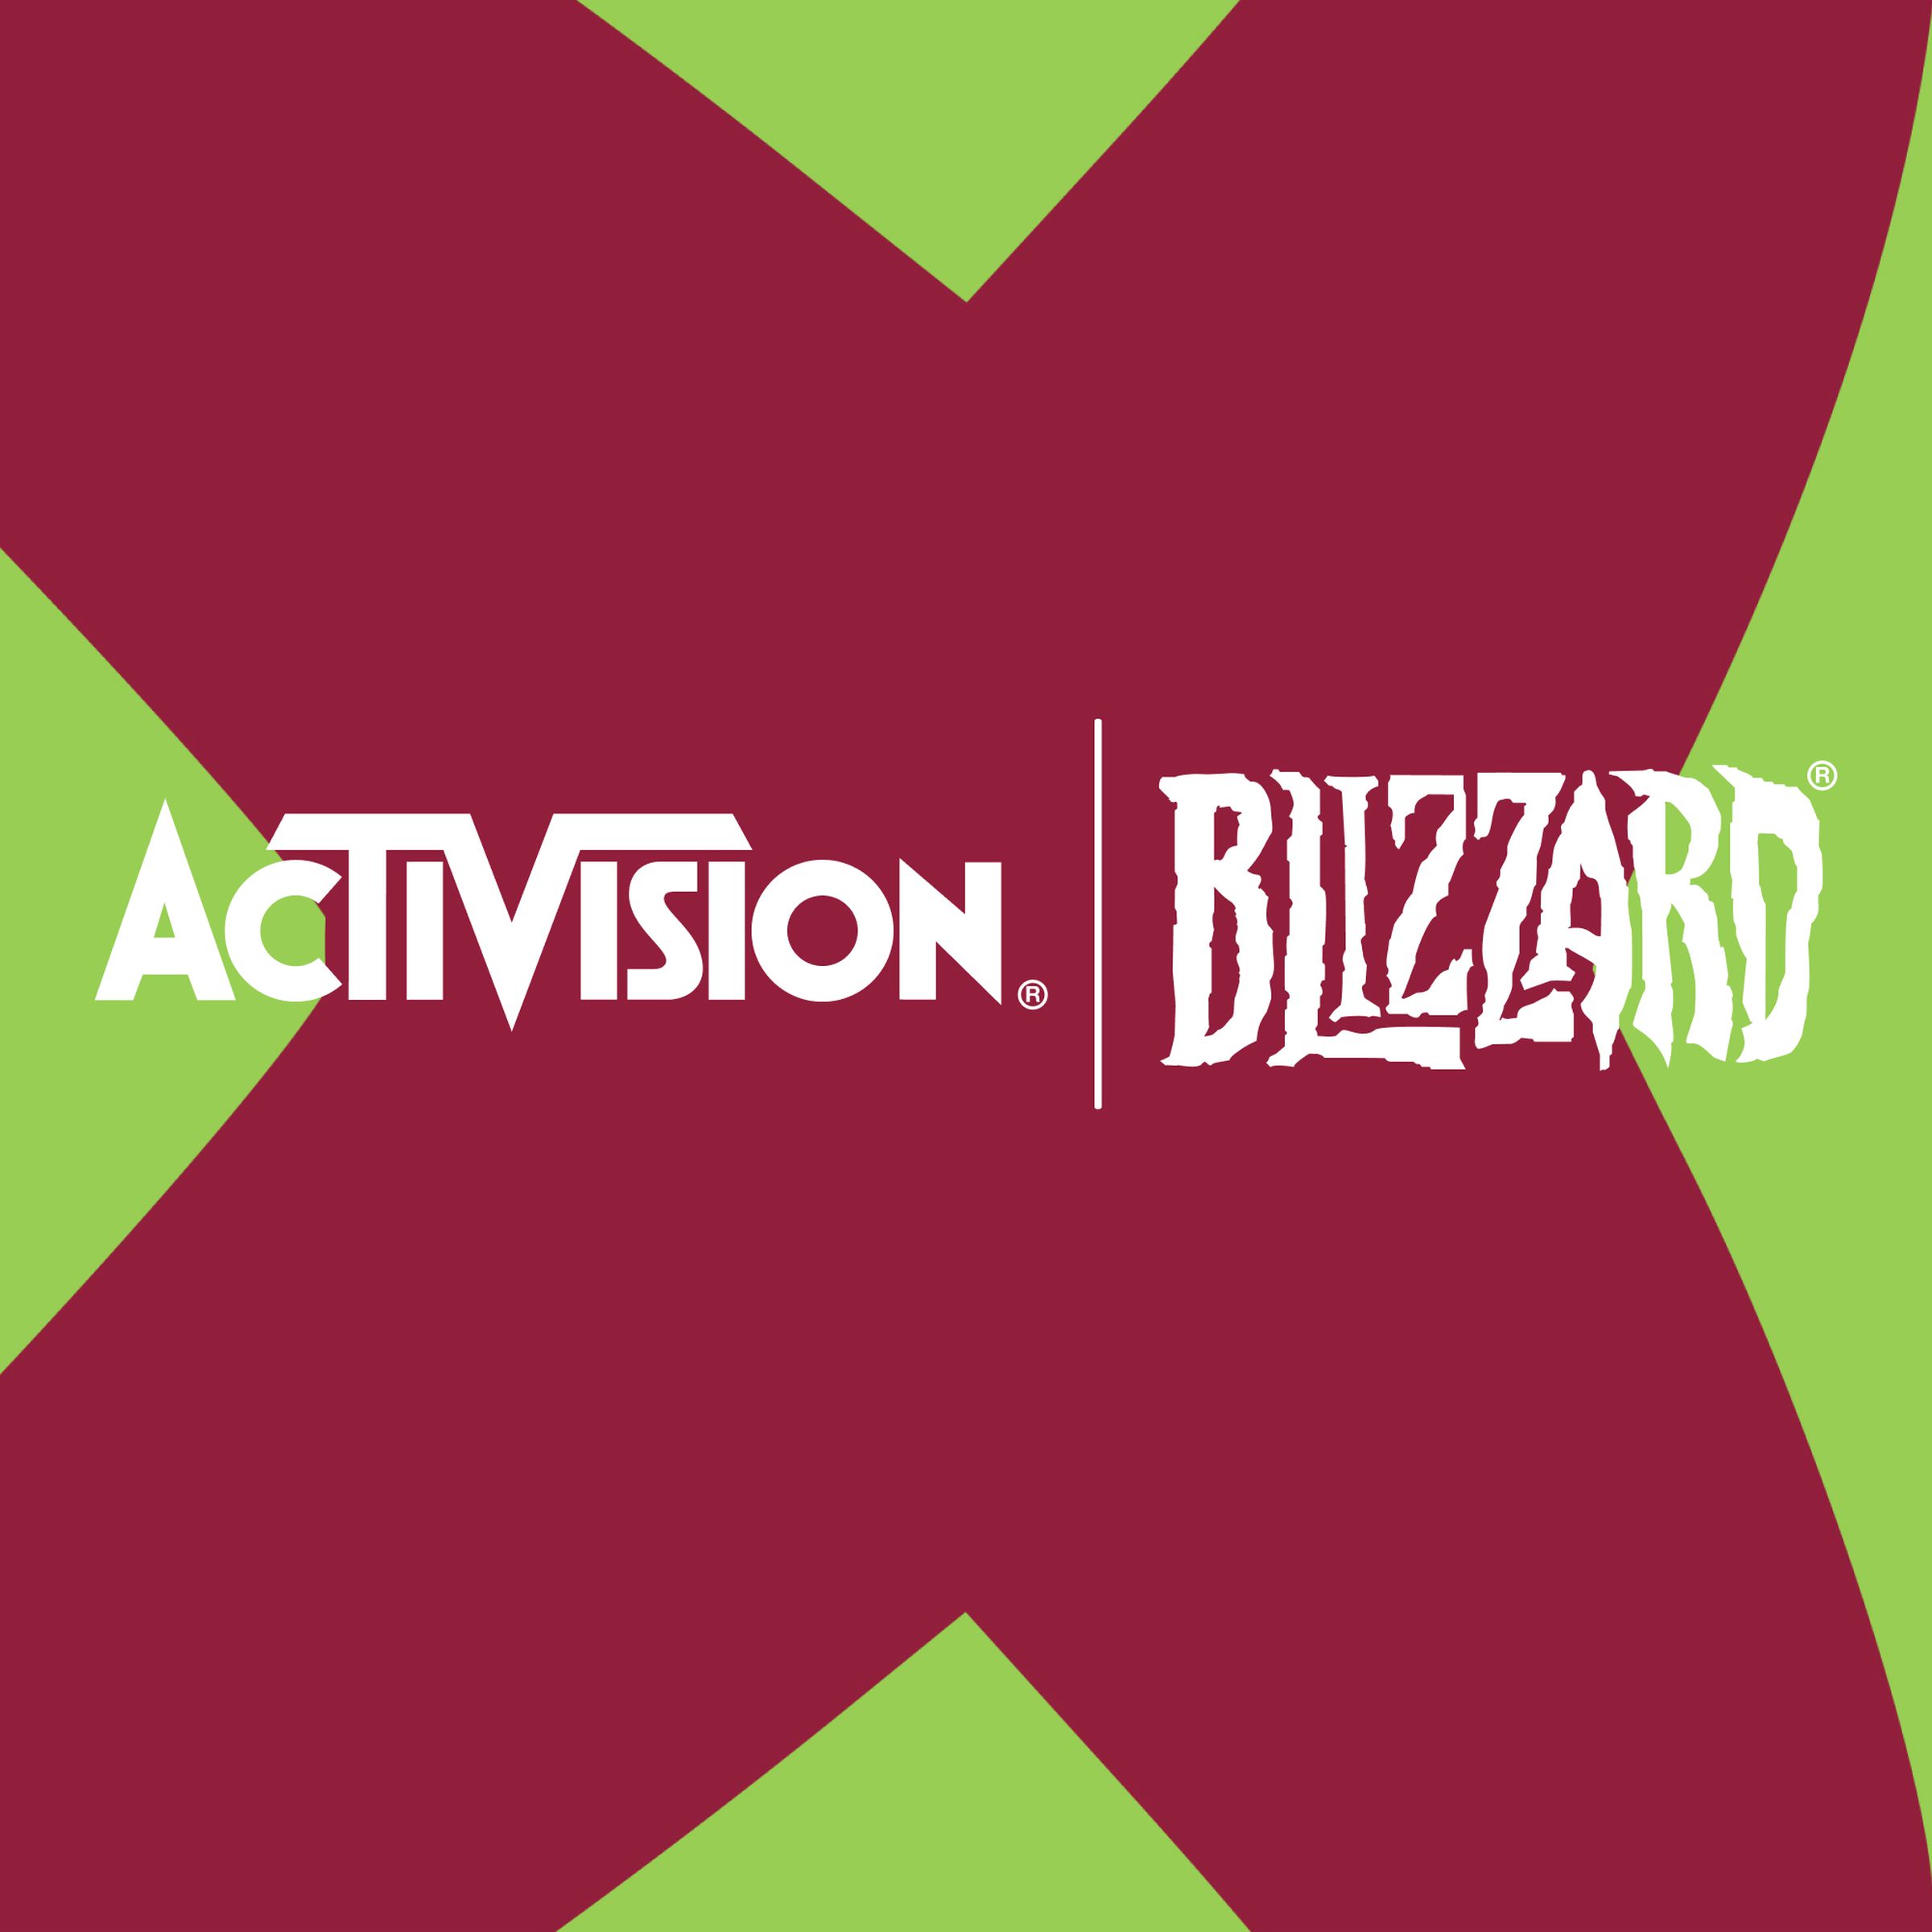 Illustration of the Activision Blizzard logo